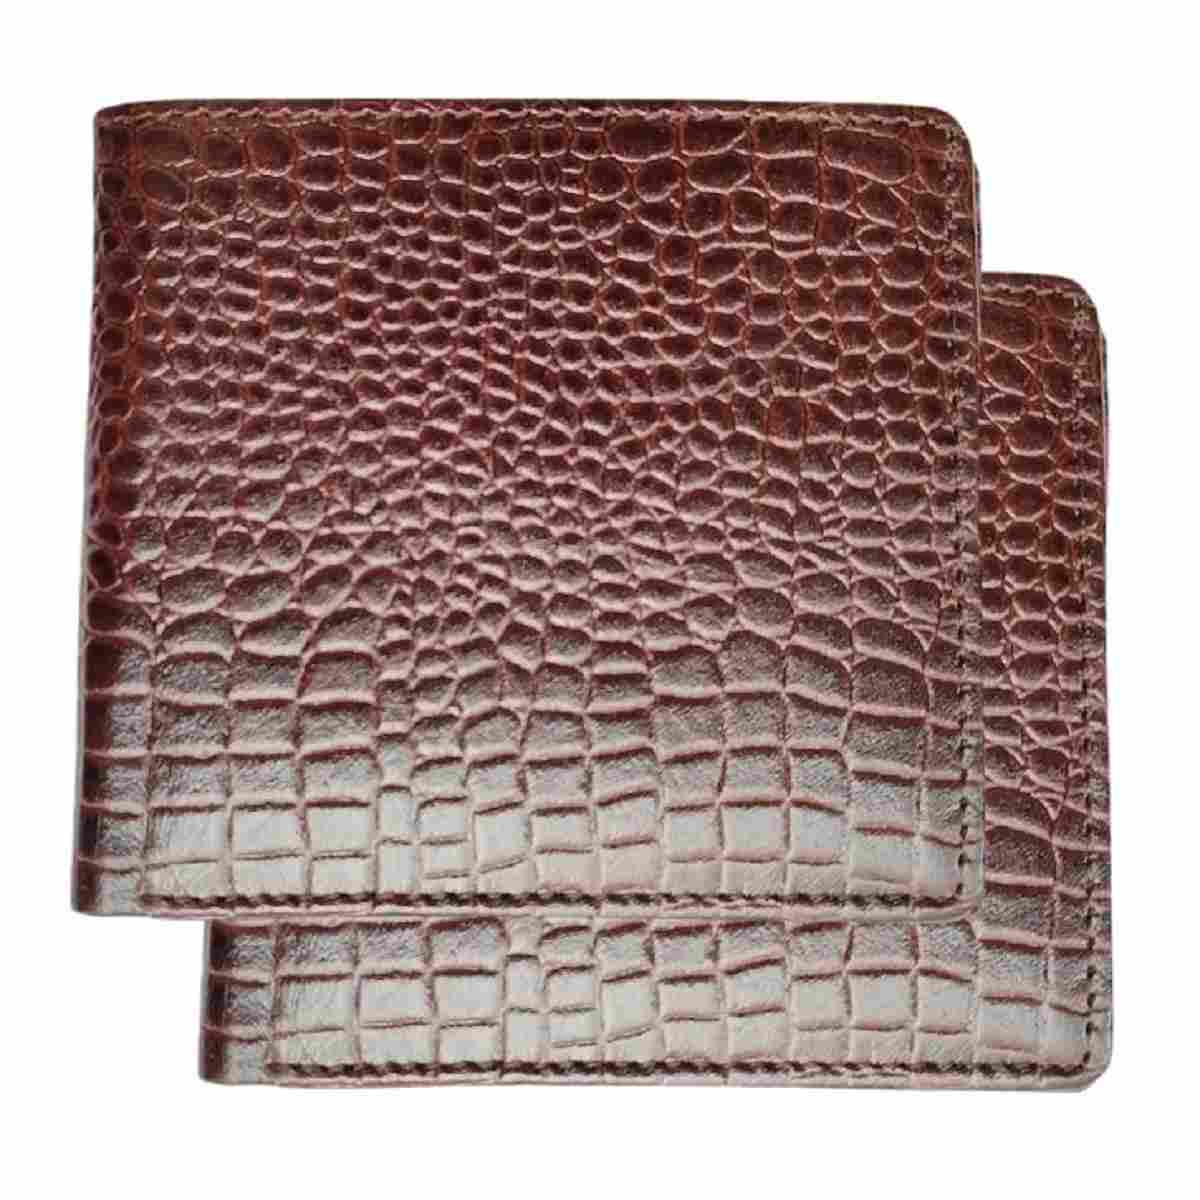 E2002 Crocodile Design Leather Wallets for men Pack of 2.